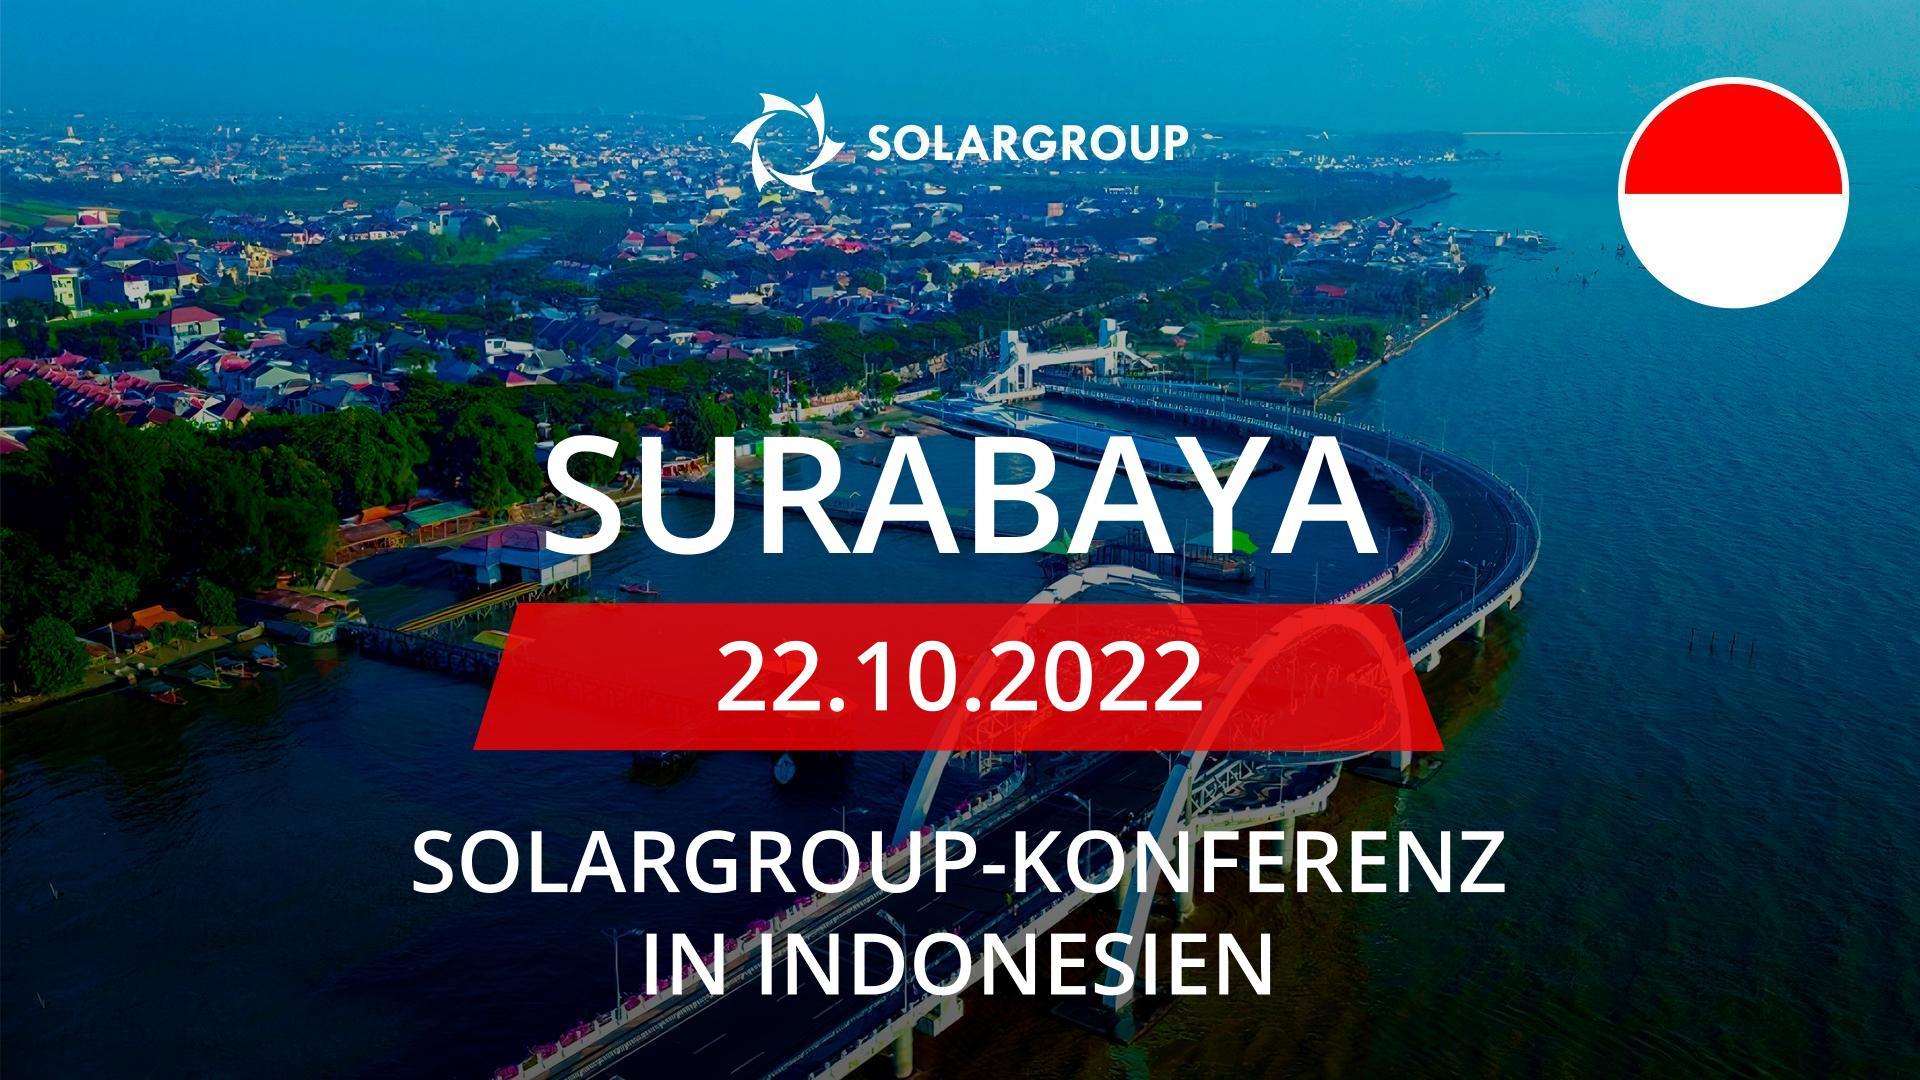 SOLARGROUP-Konferenz in Indonesien: 22. Oktober, Surabaya